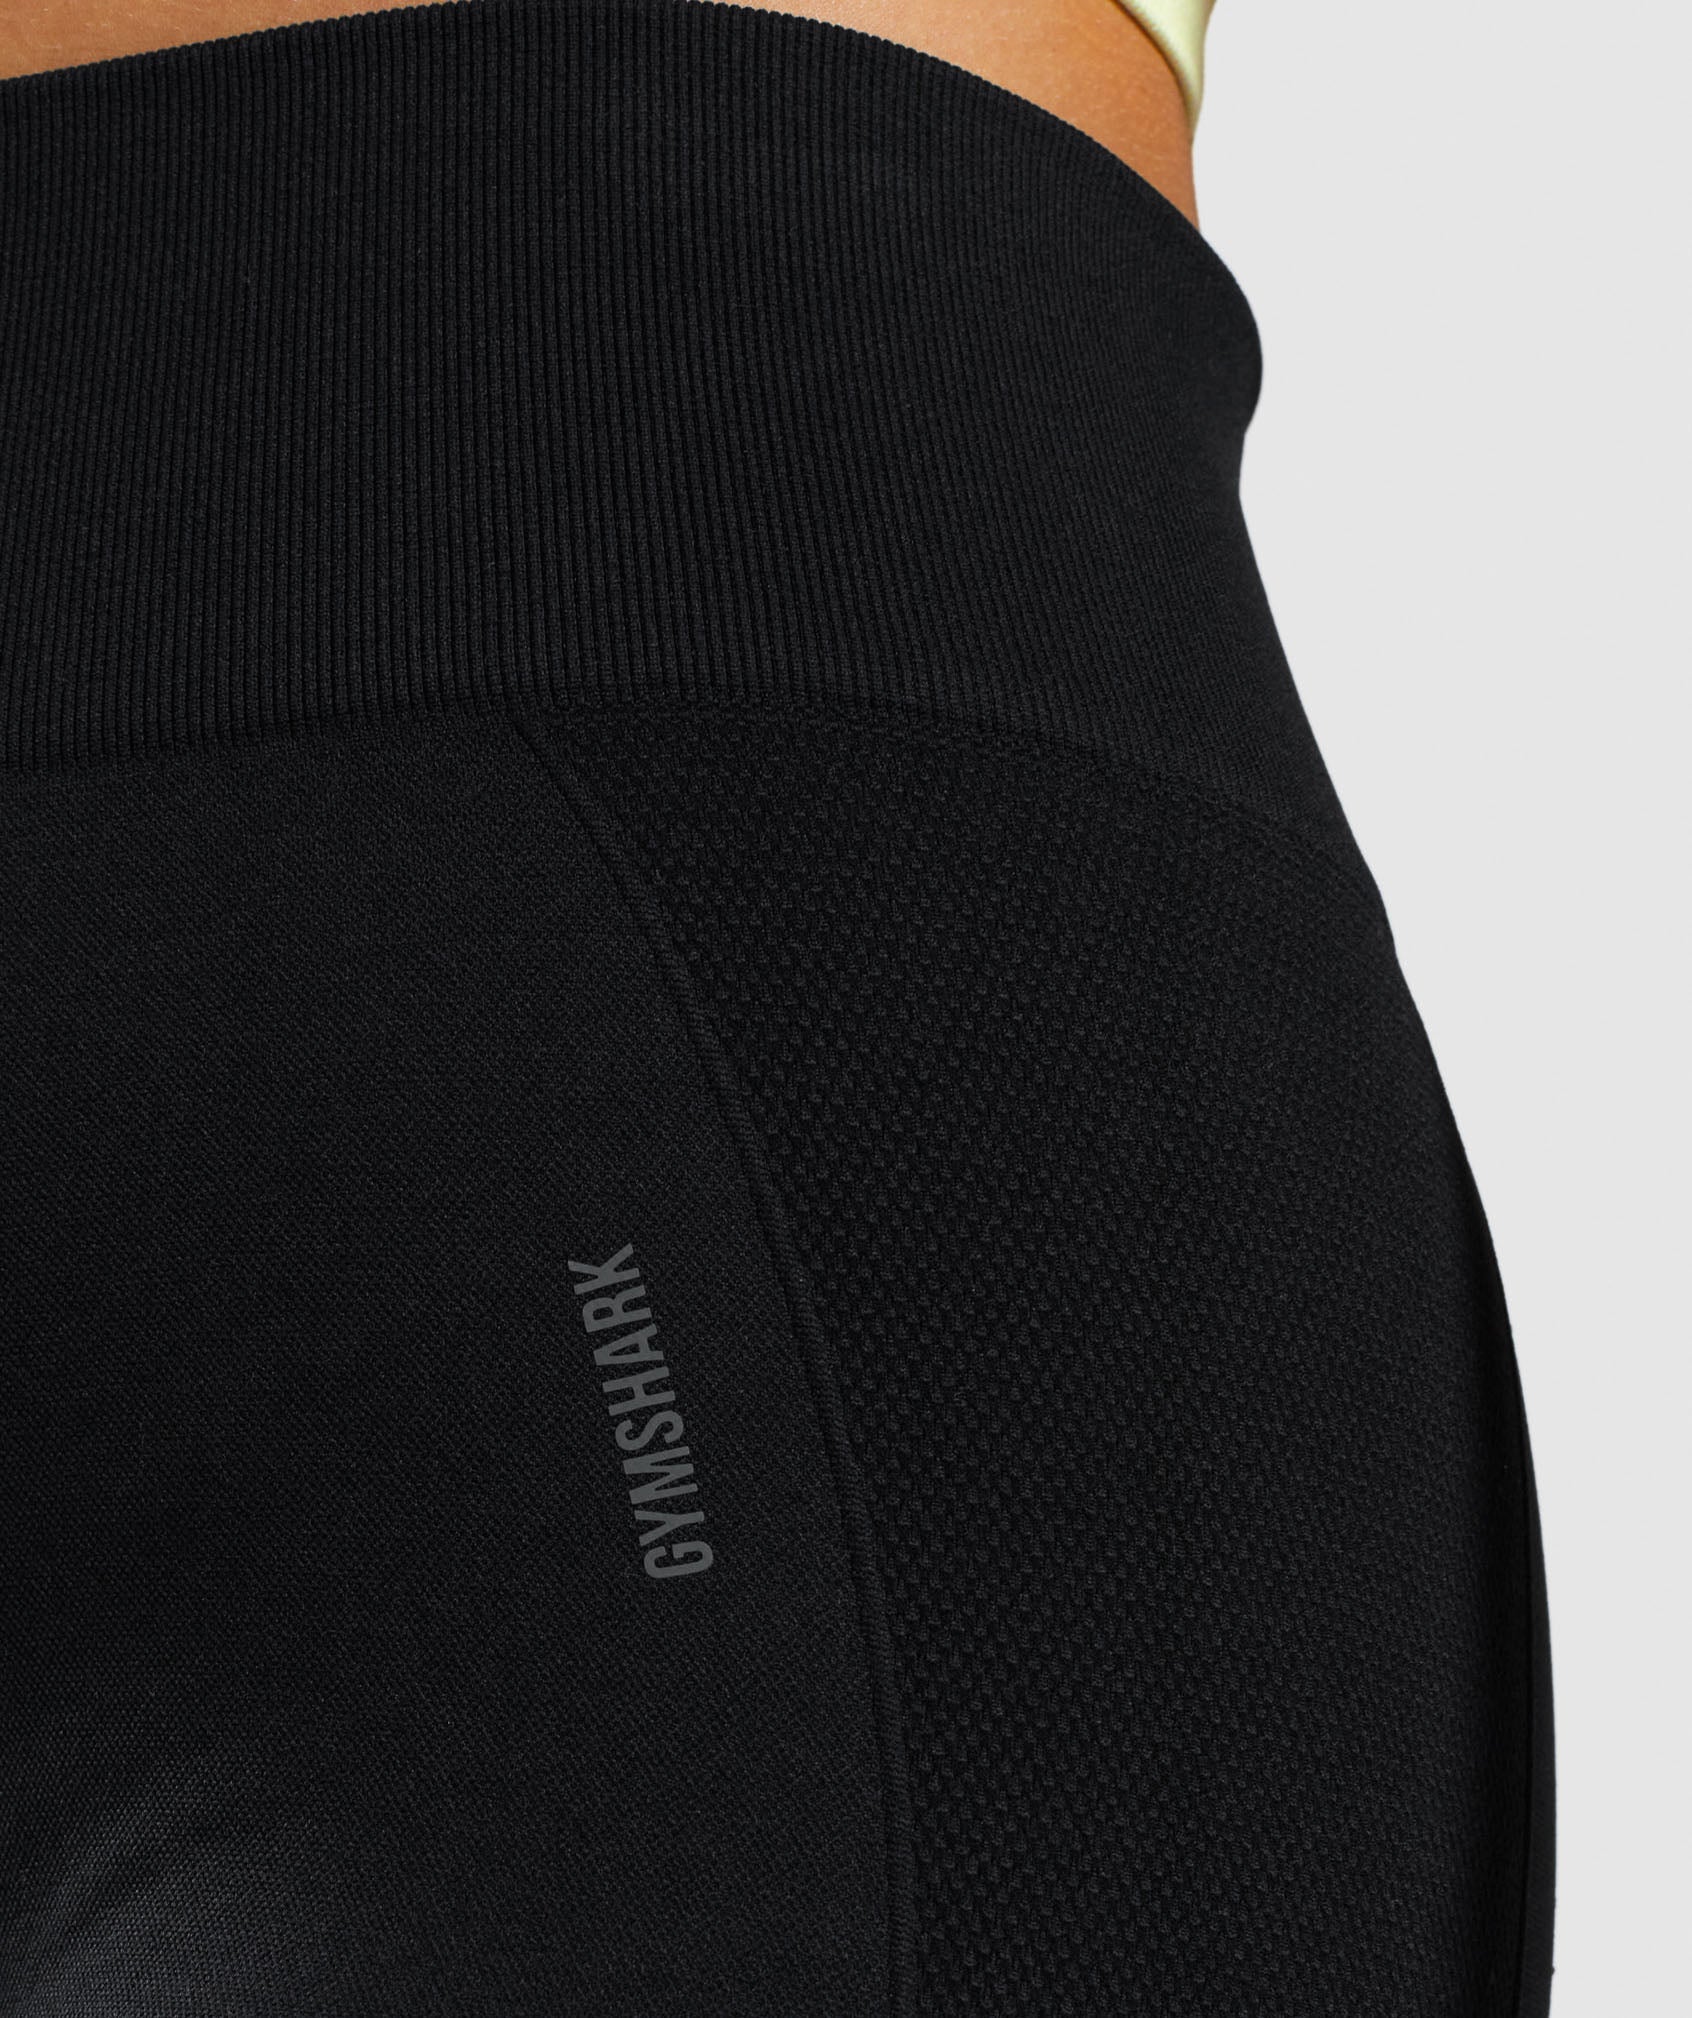 Flex Cycling Shorts in Black/Charcoal